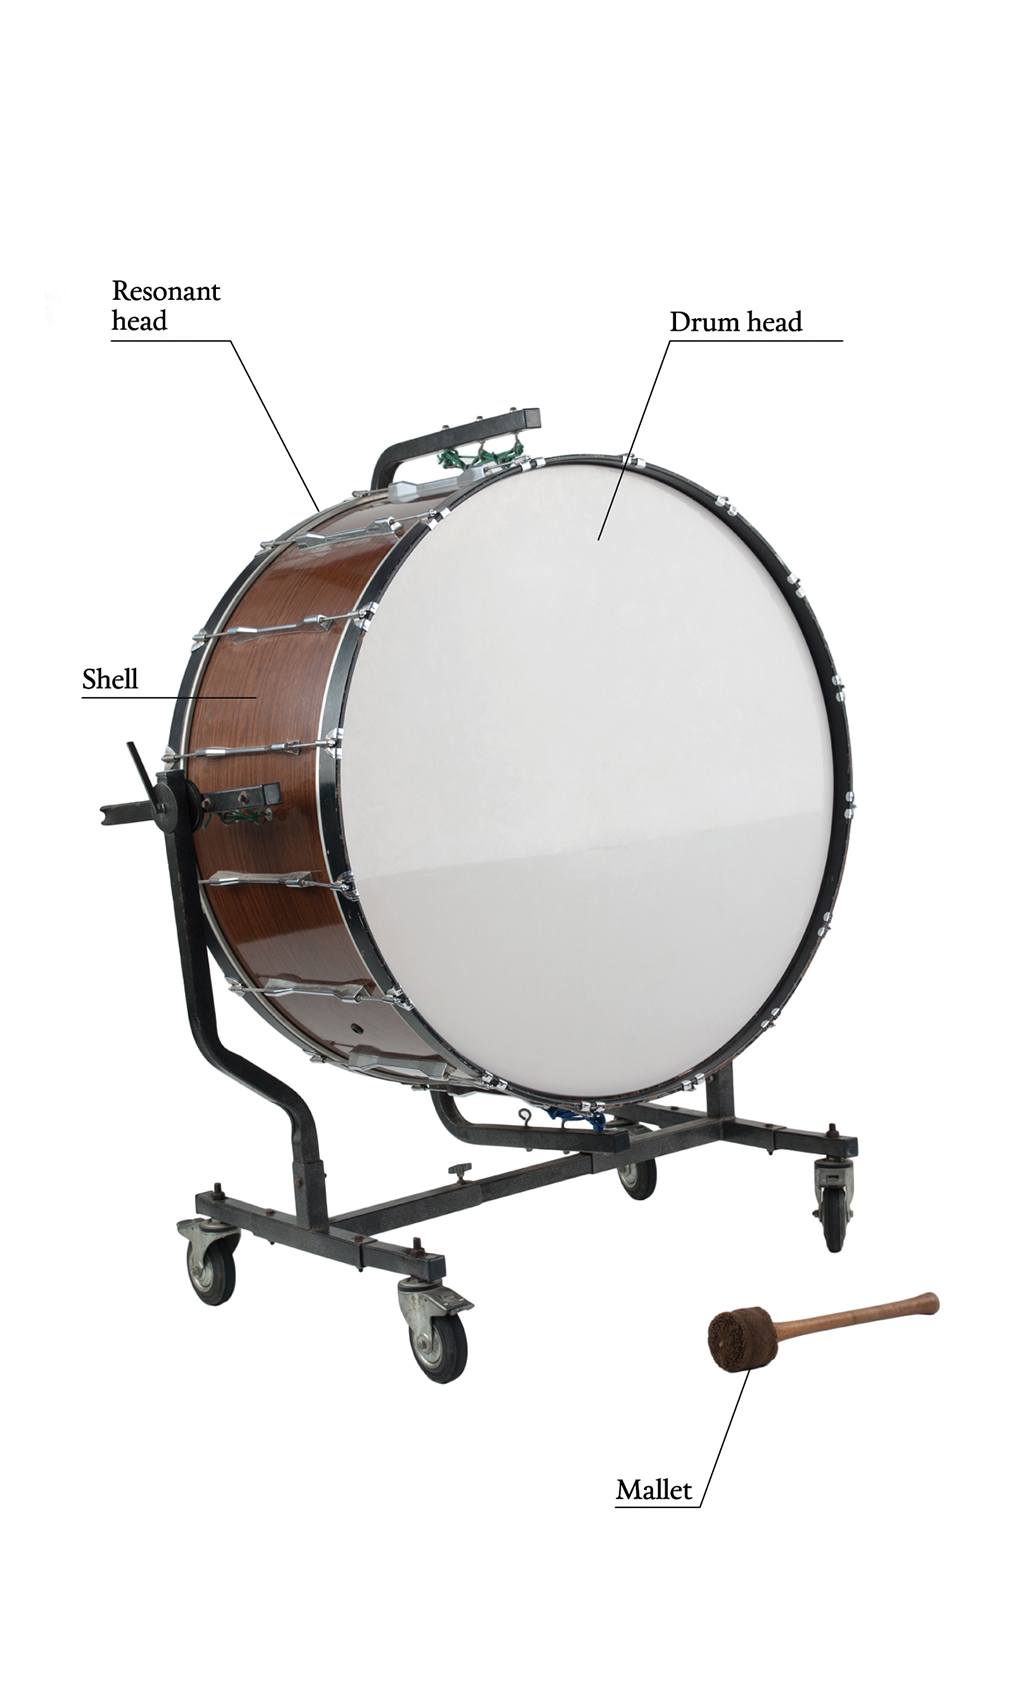 Bass drum - Wikipedia